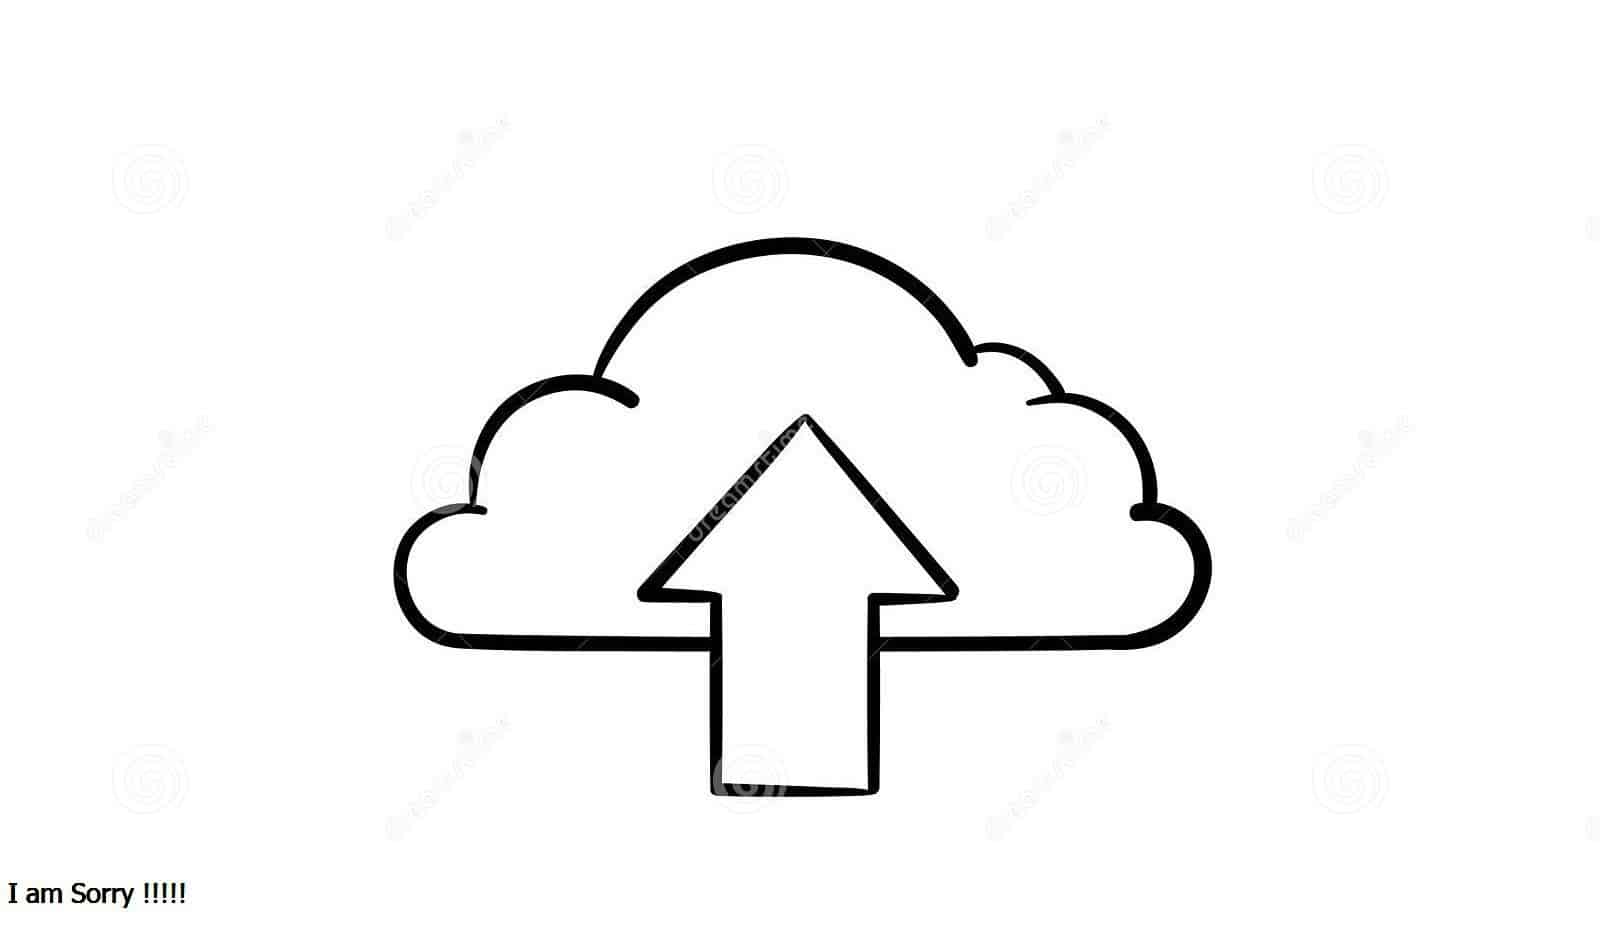 cloud-arrow-up-hand-drawn-outline-doodle-icon-cloud-upload-technology-cloud-storage-service-concept-vector-sketch-137364901